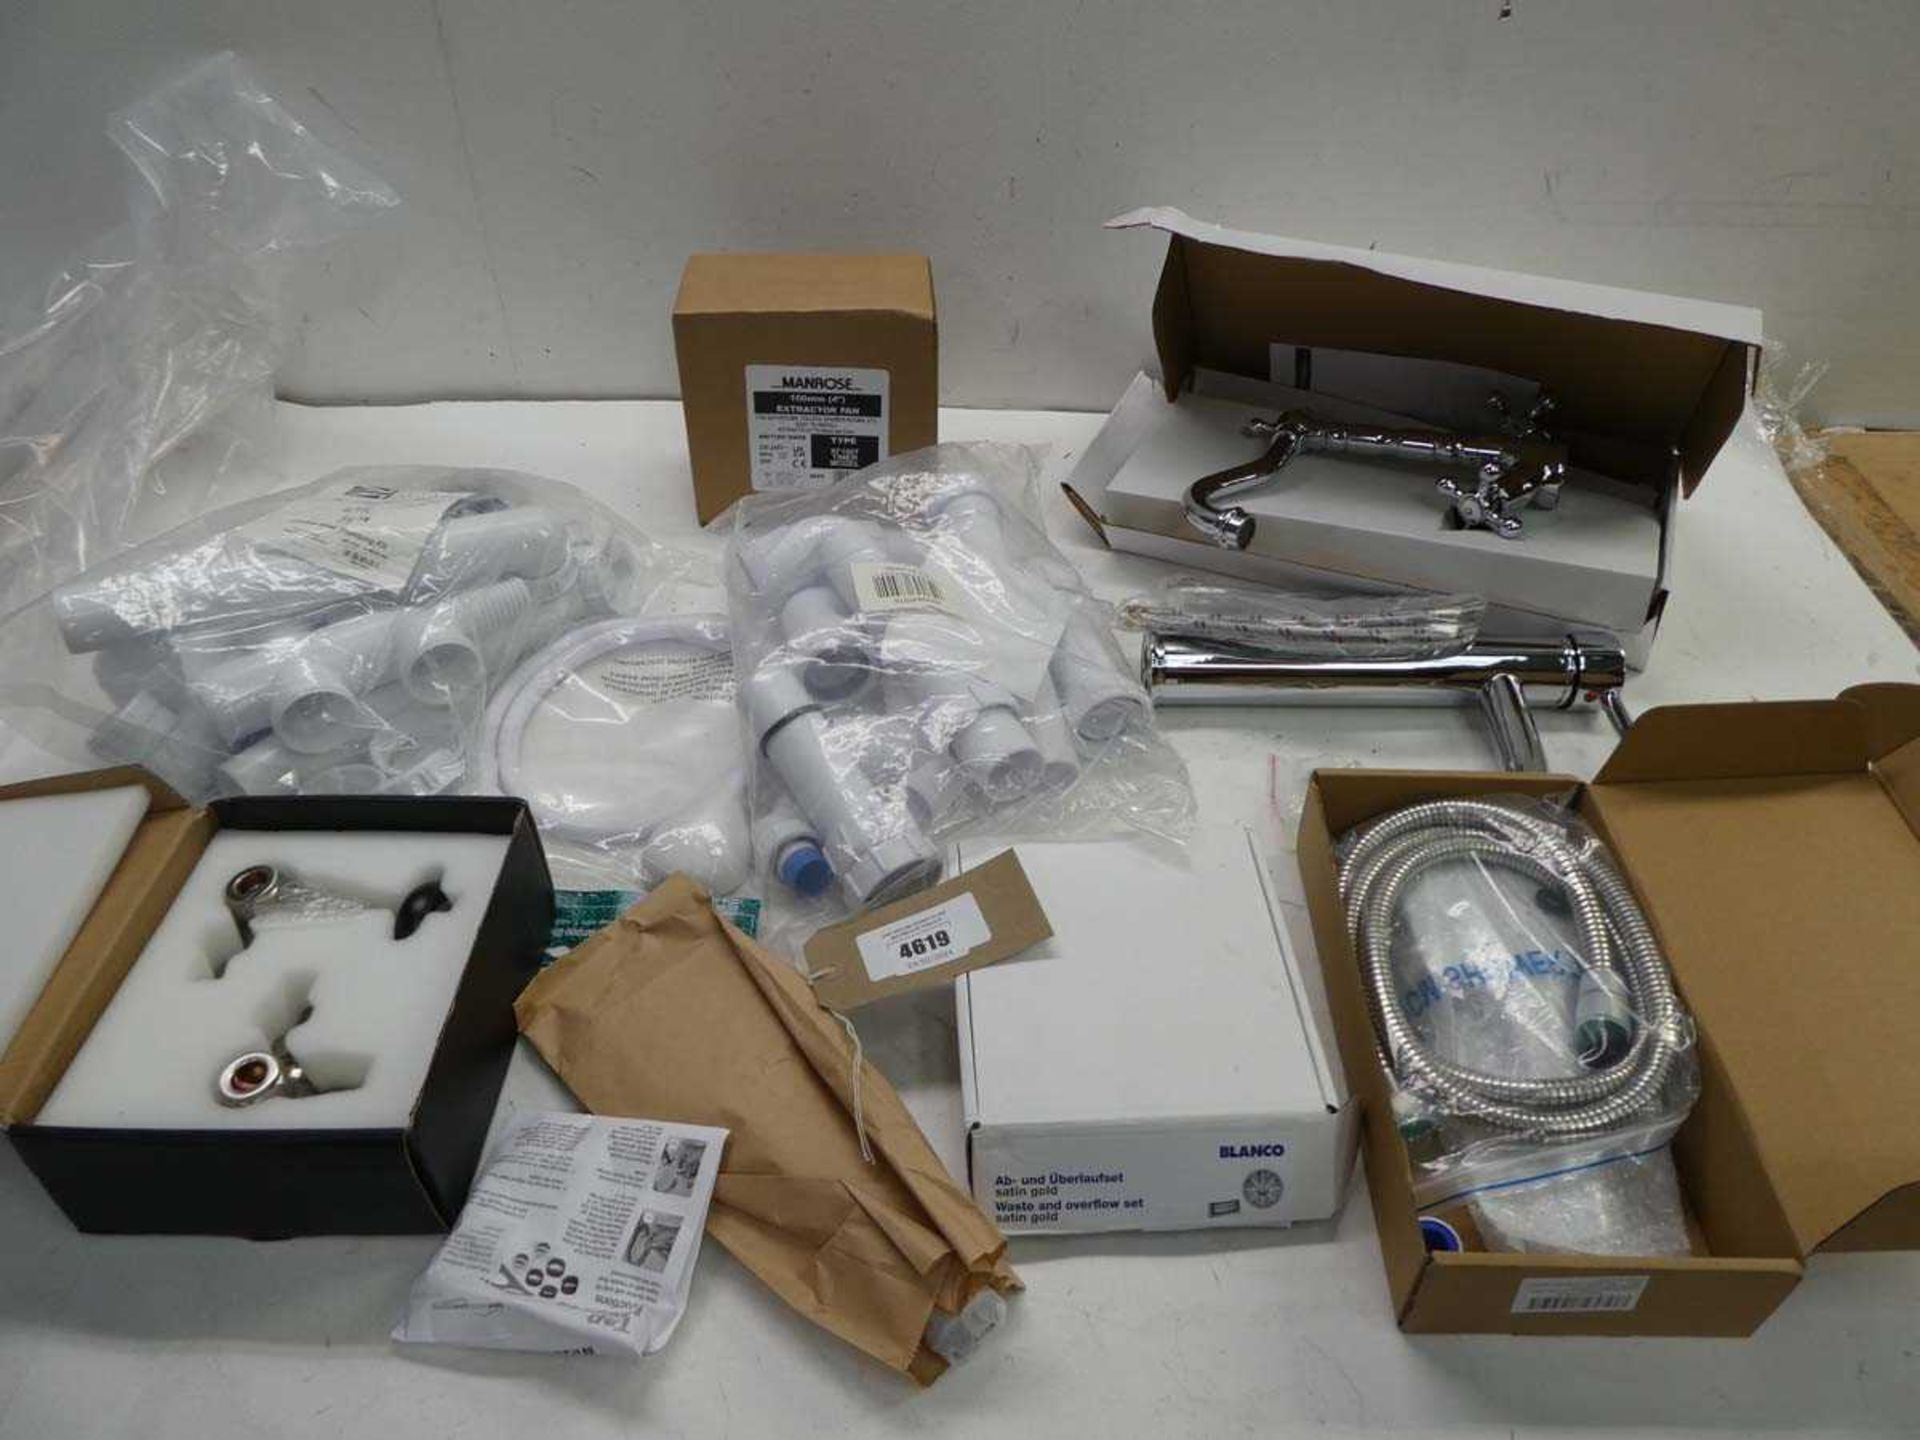 +VAT Radiator valves, bowl plumbing kits, waste & overflow kits, taps, extractor fan etc